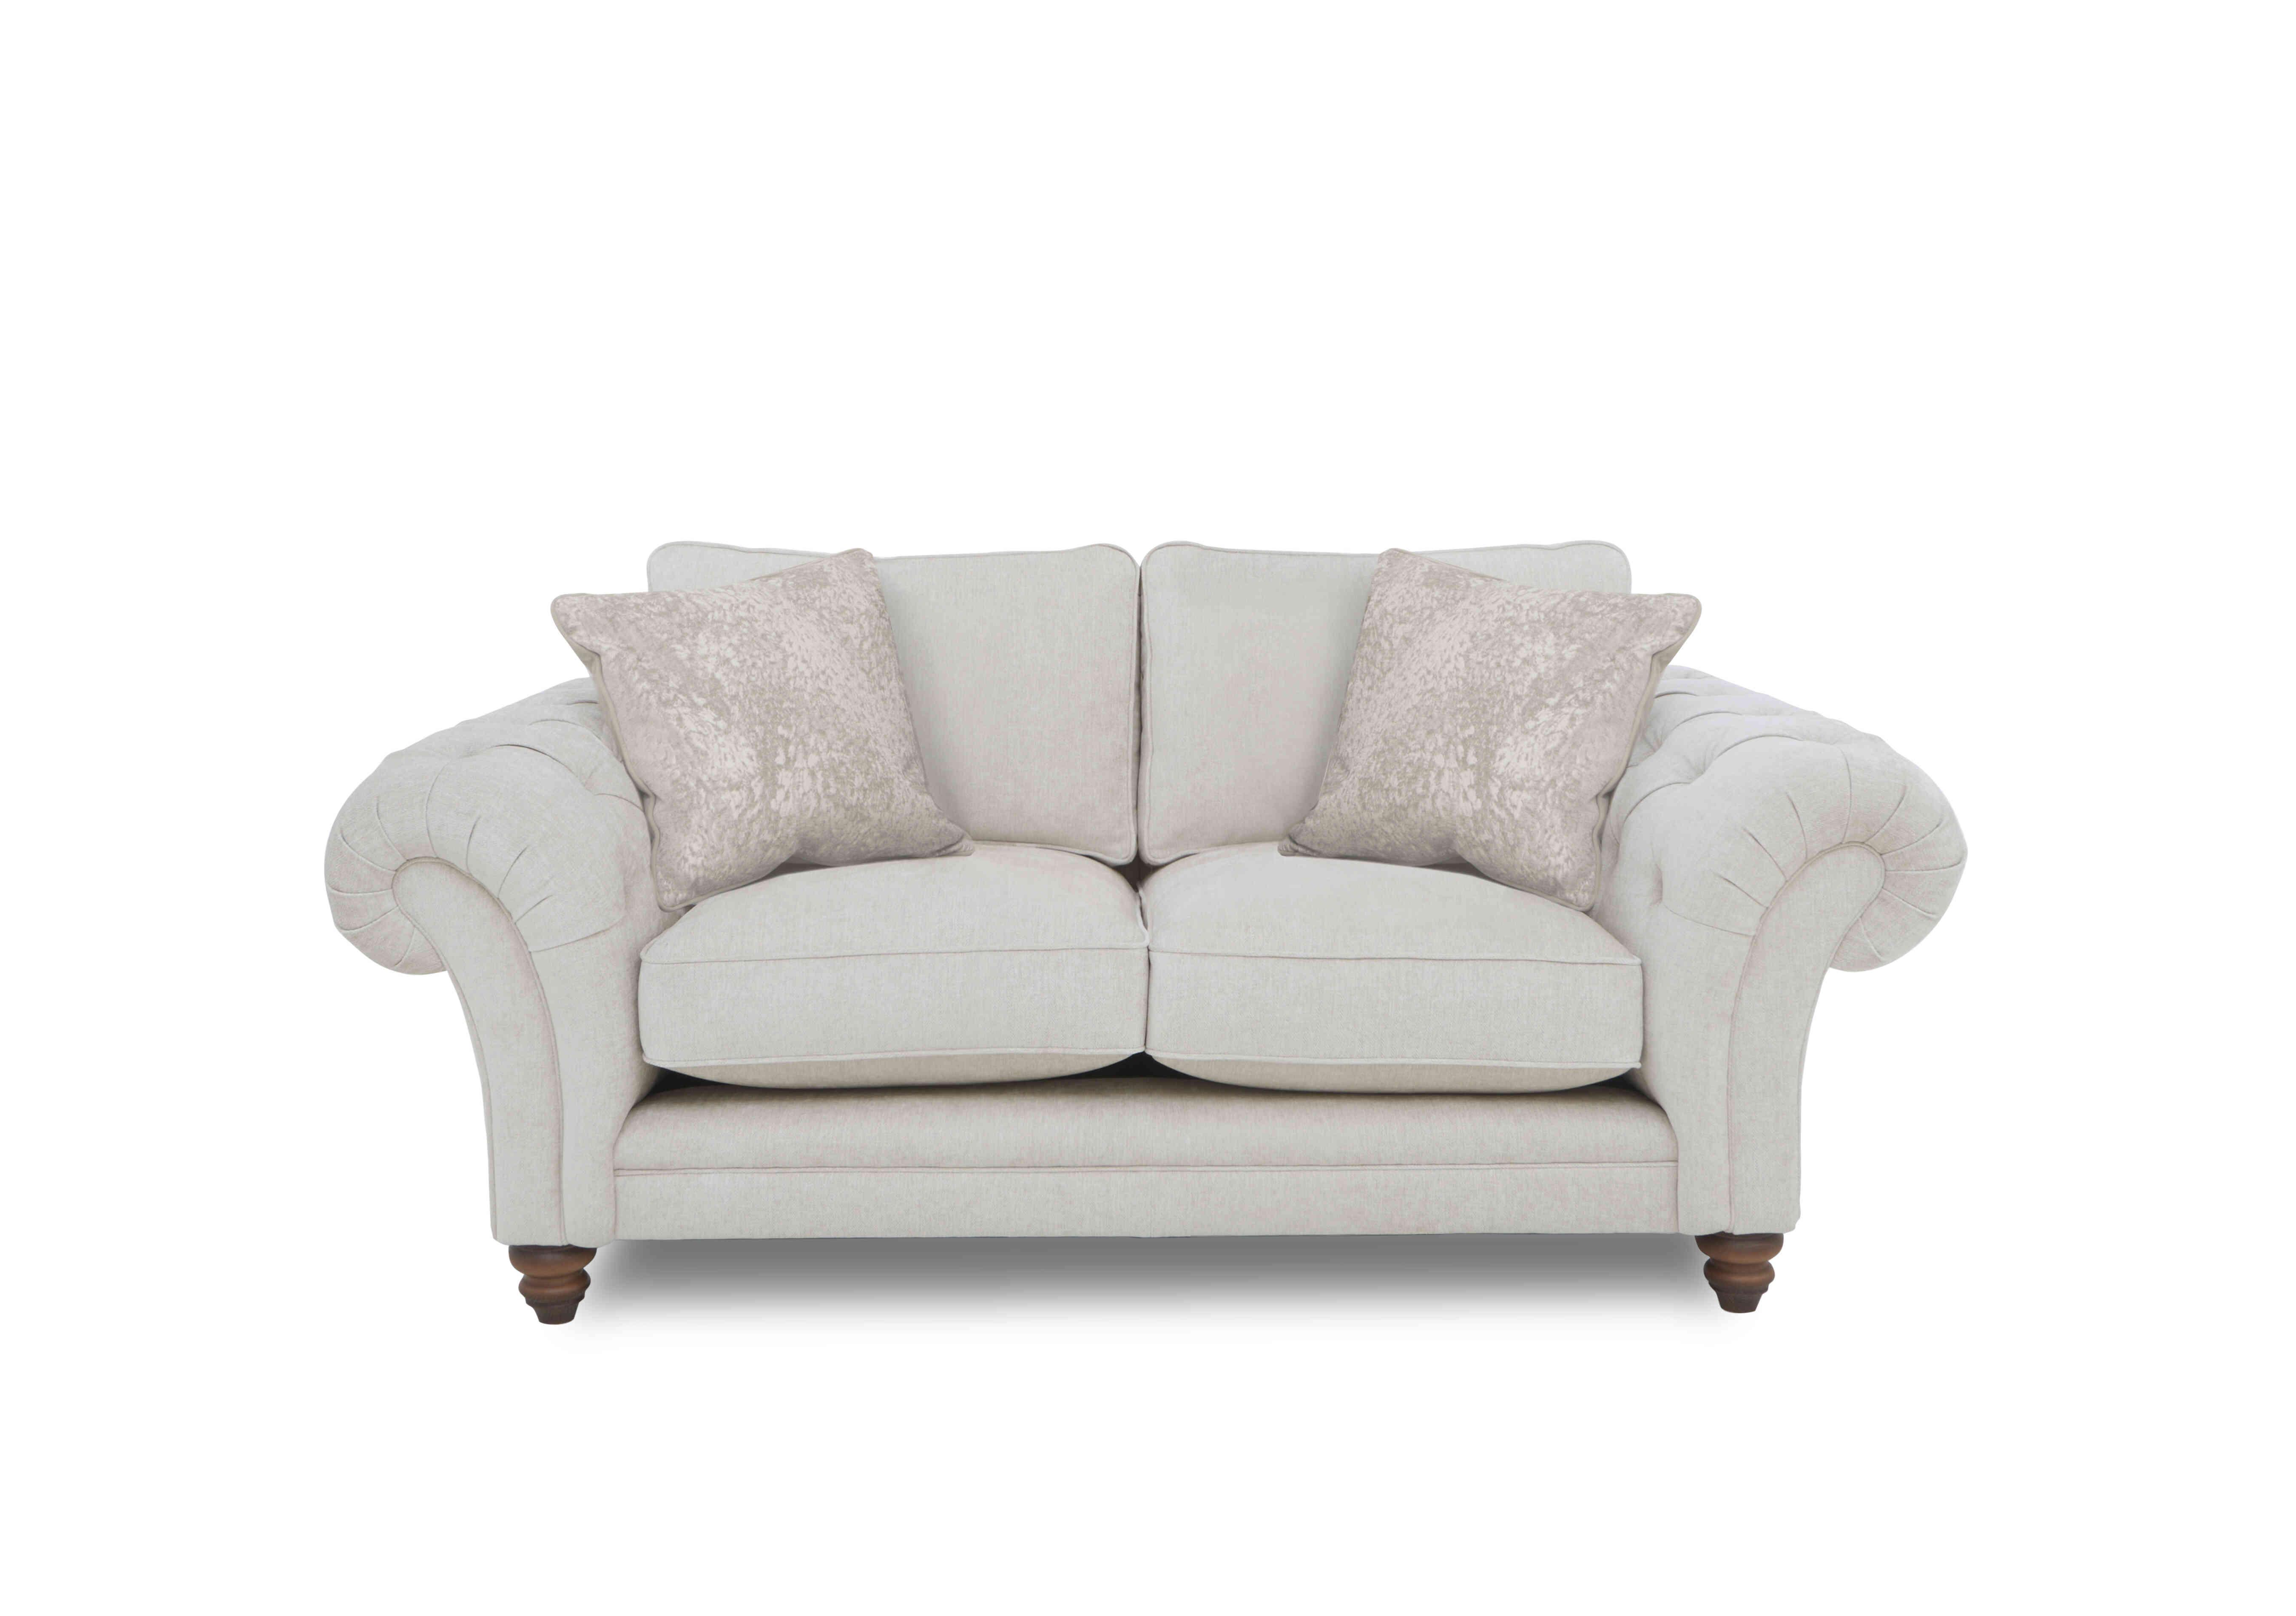 Blenheim 2 Seater Classic Back Sofa in Darwin Ivory Wf on Furniture Village